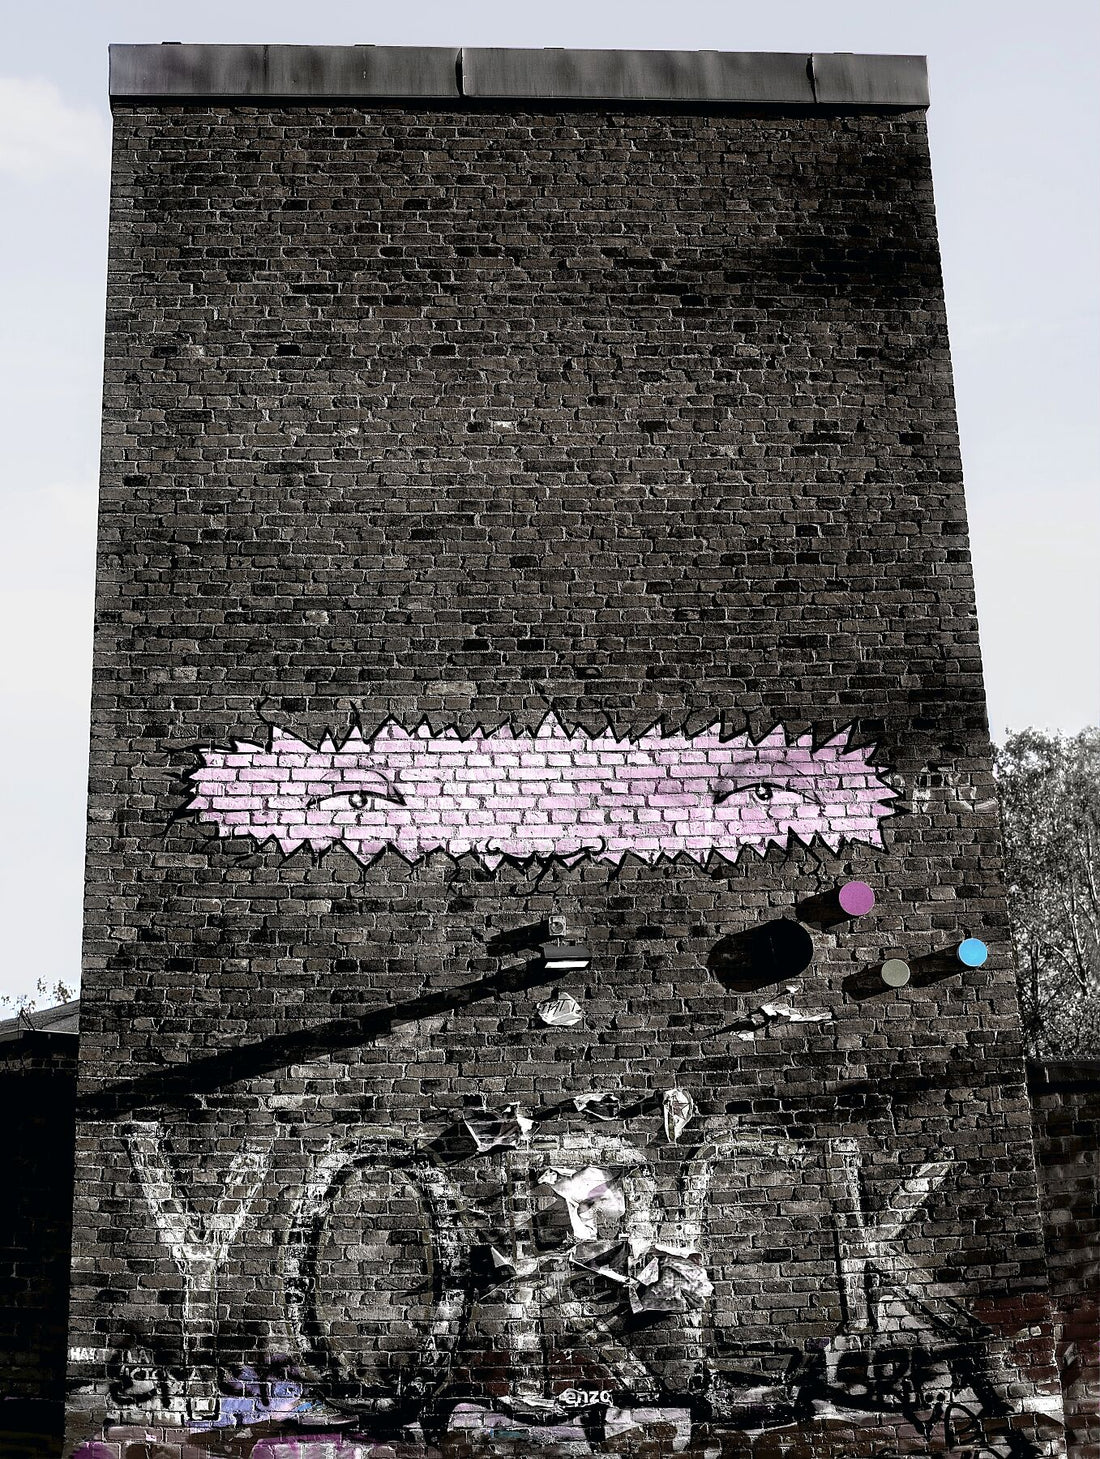 Lampe an einer Wand - Yorck Berlin - sw - C-Typ Fudi Matt